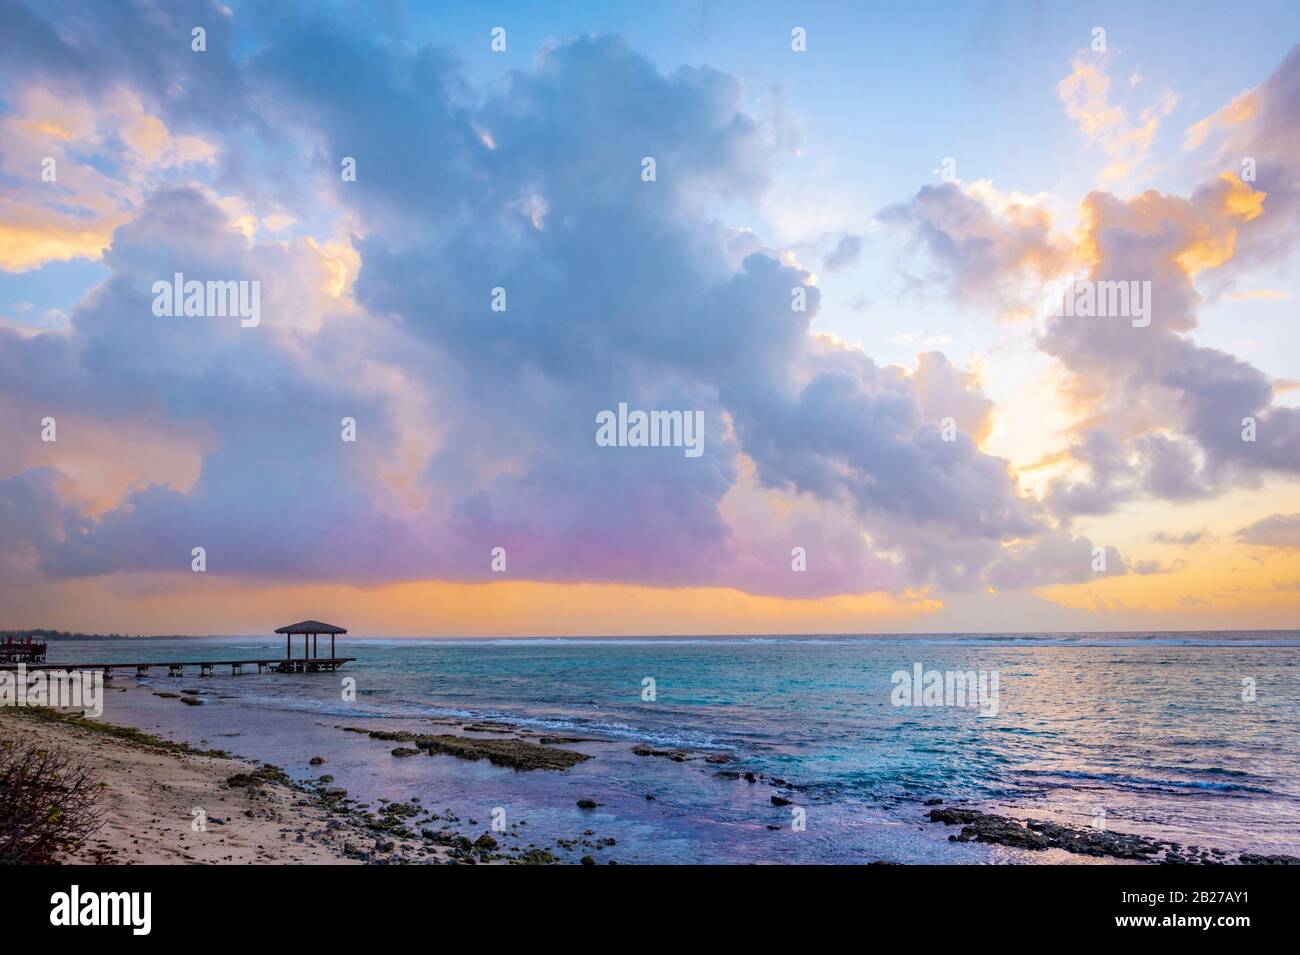 Farbenfroher Sonnenaufgang mit Pier, Grand Cayman Island Stockfoto